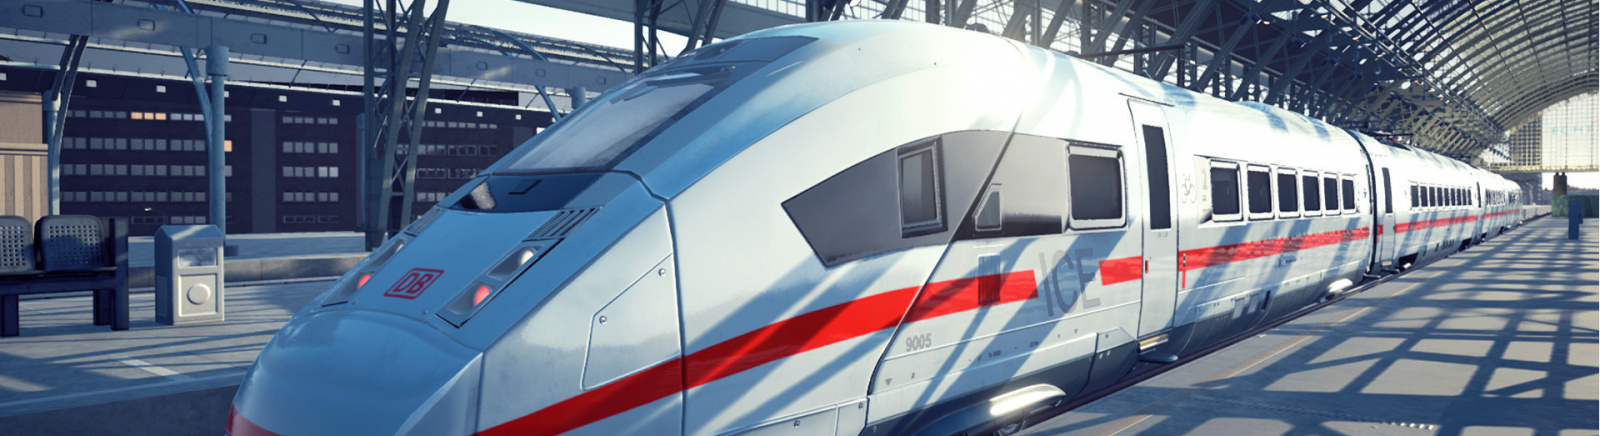 Дата выхода Train Life: A Railway Simulator  на PC, PS5 и Xbox Series X/S в России и во всем мире